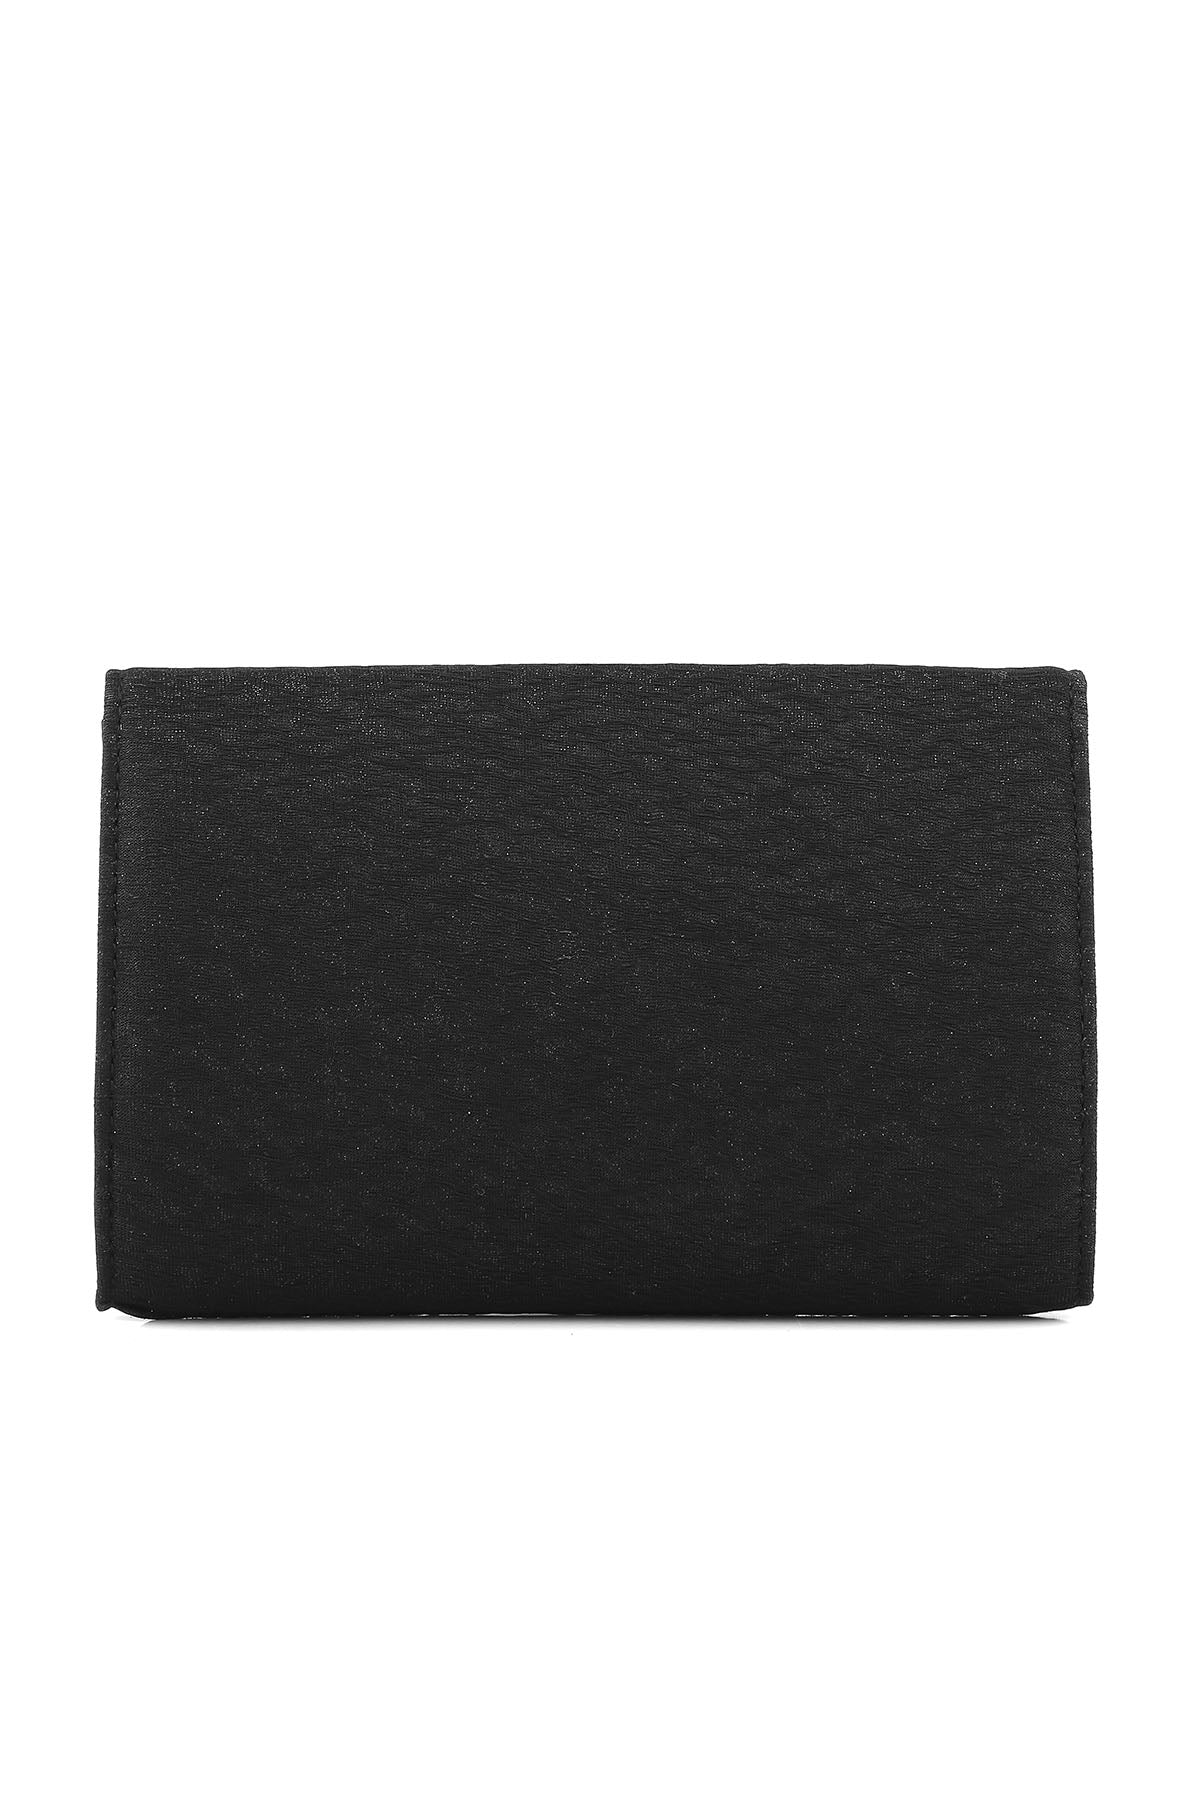 Flap Shoulder Bags B20754-Black